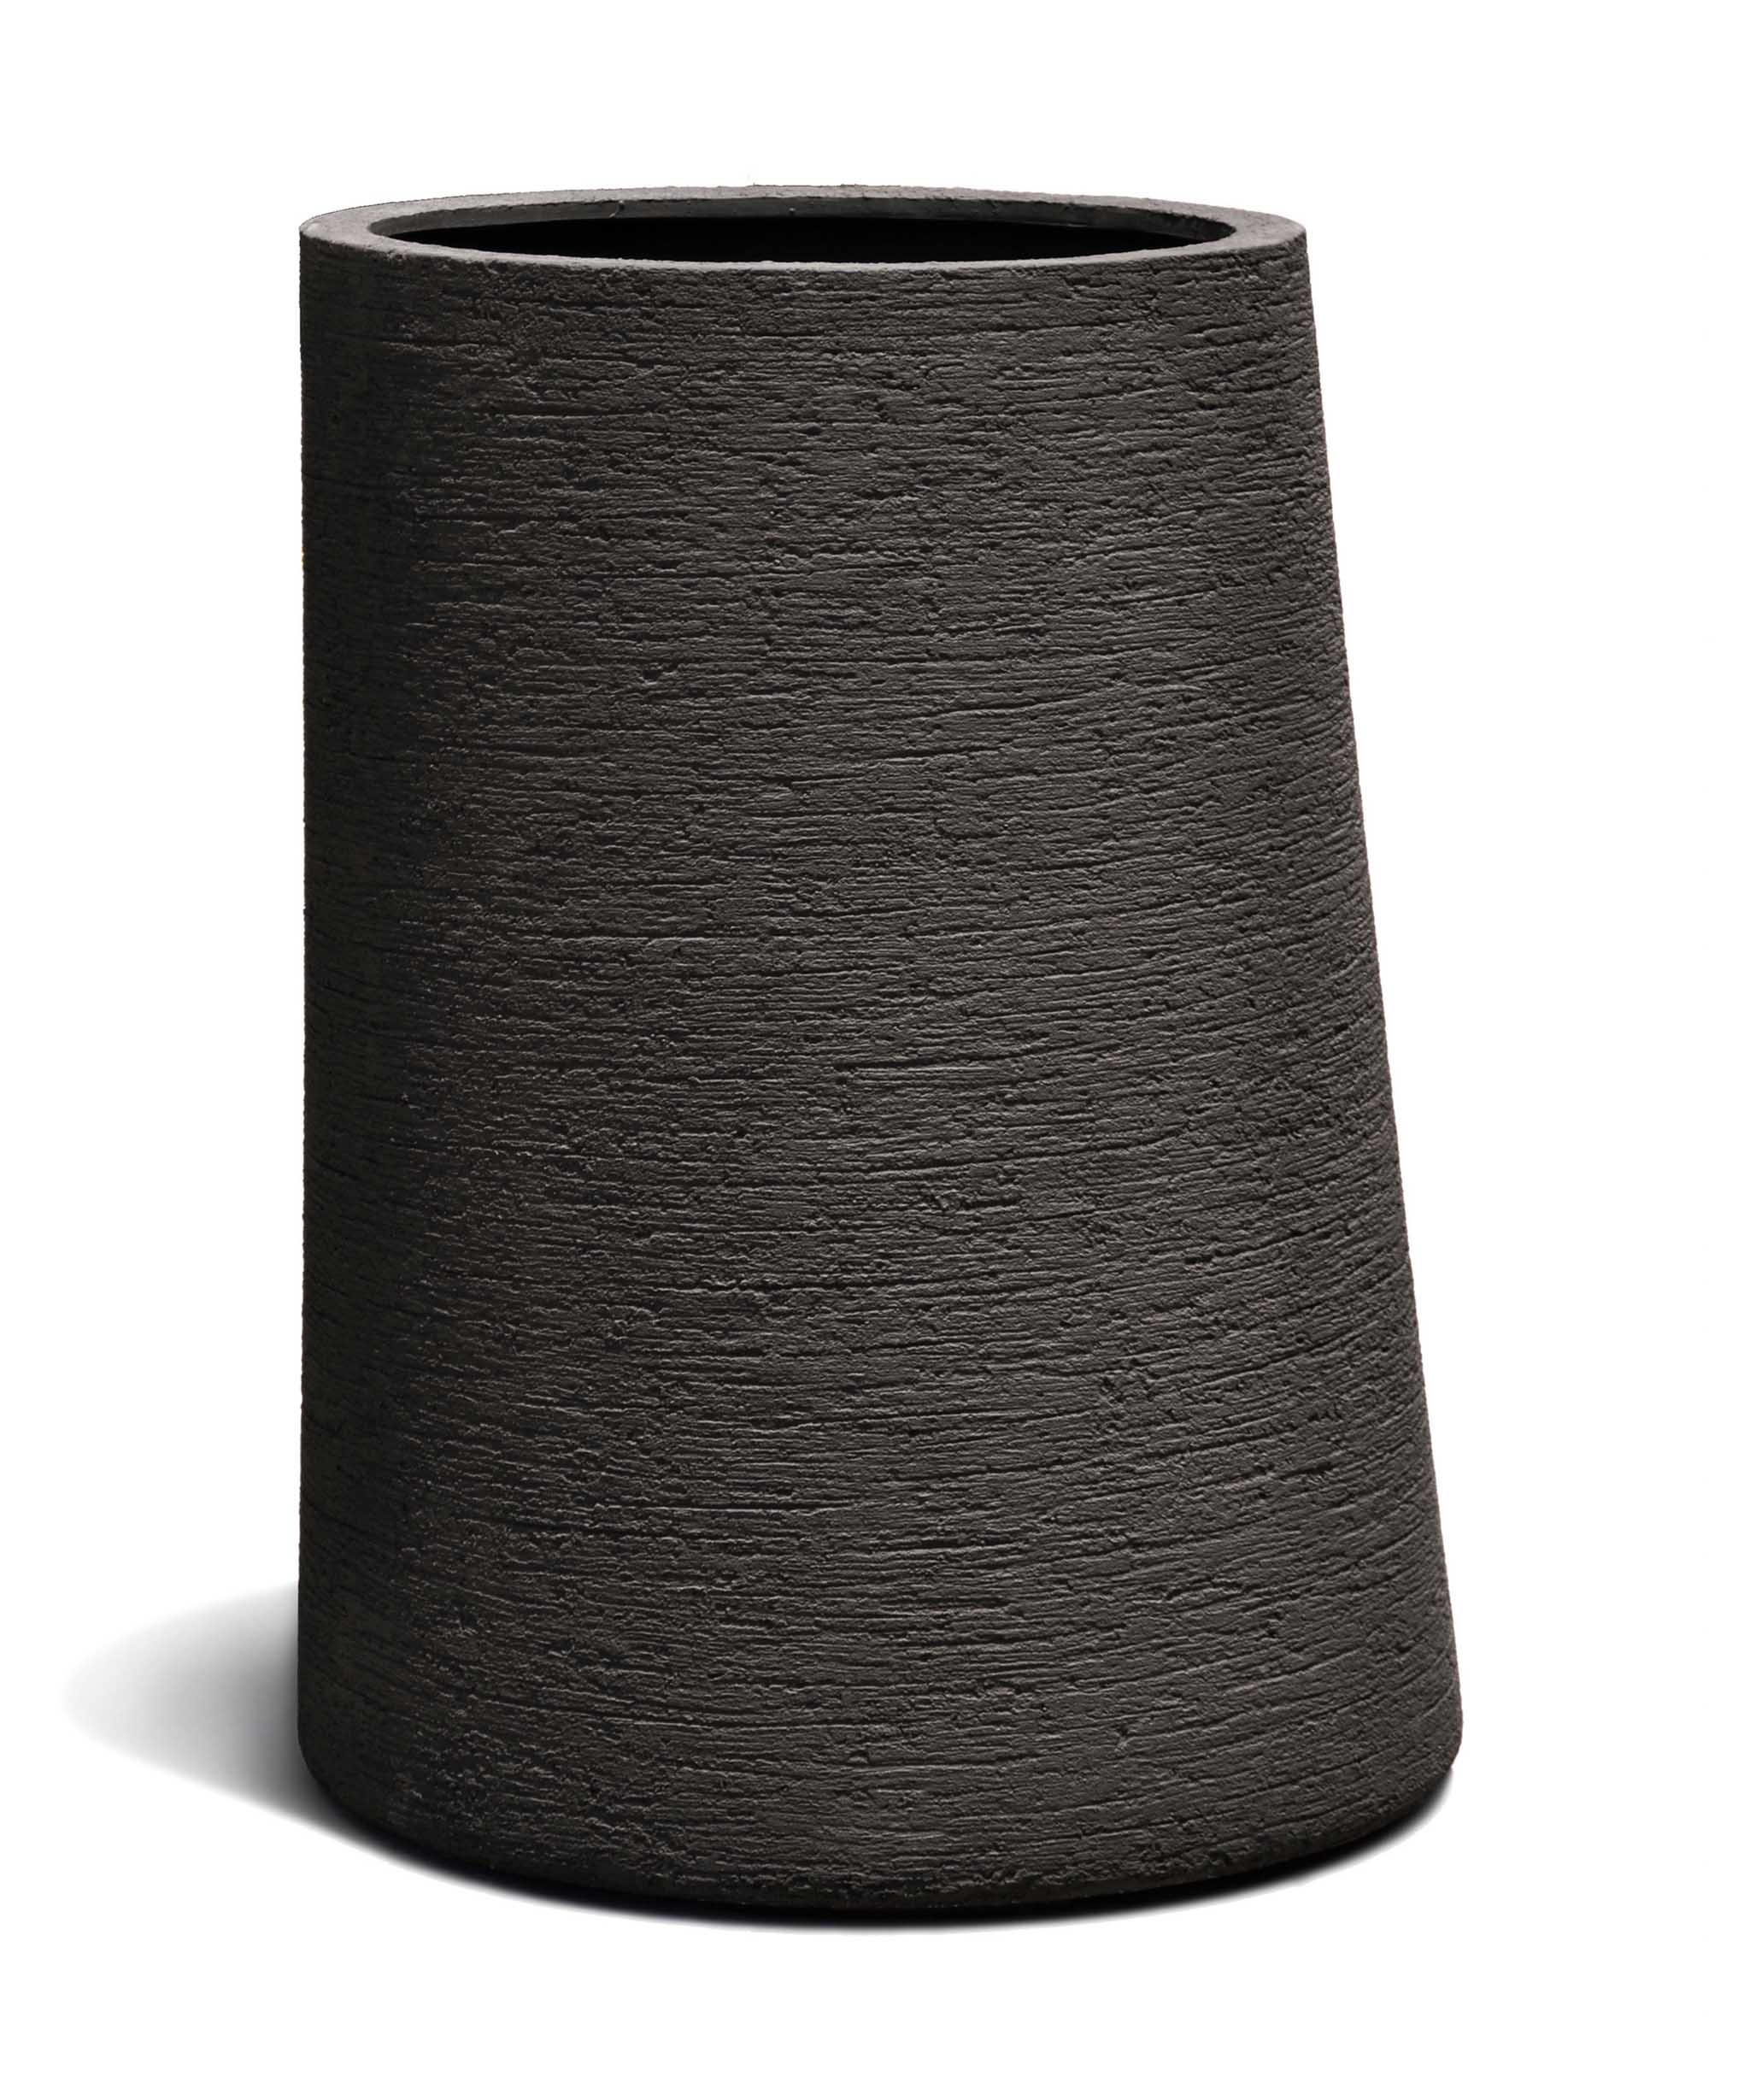 Asymmetric Vase | Terra Collection | Black Sand